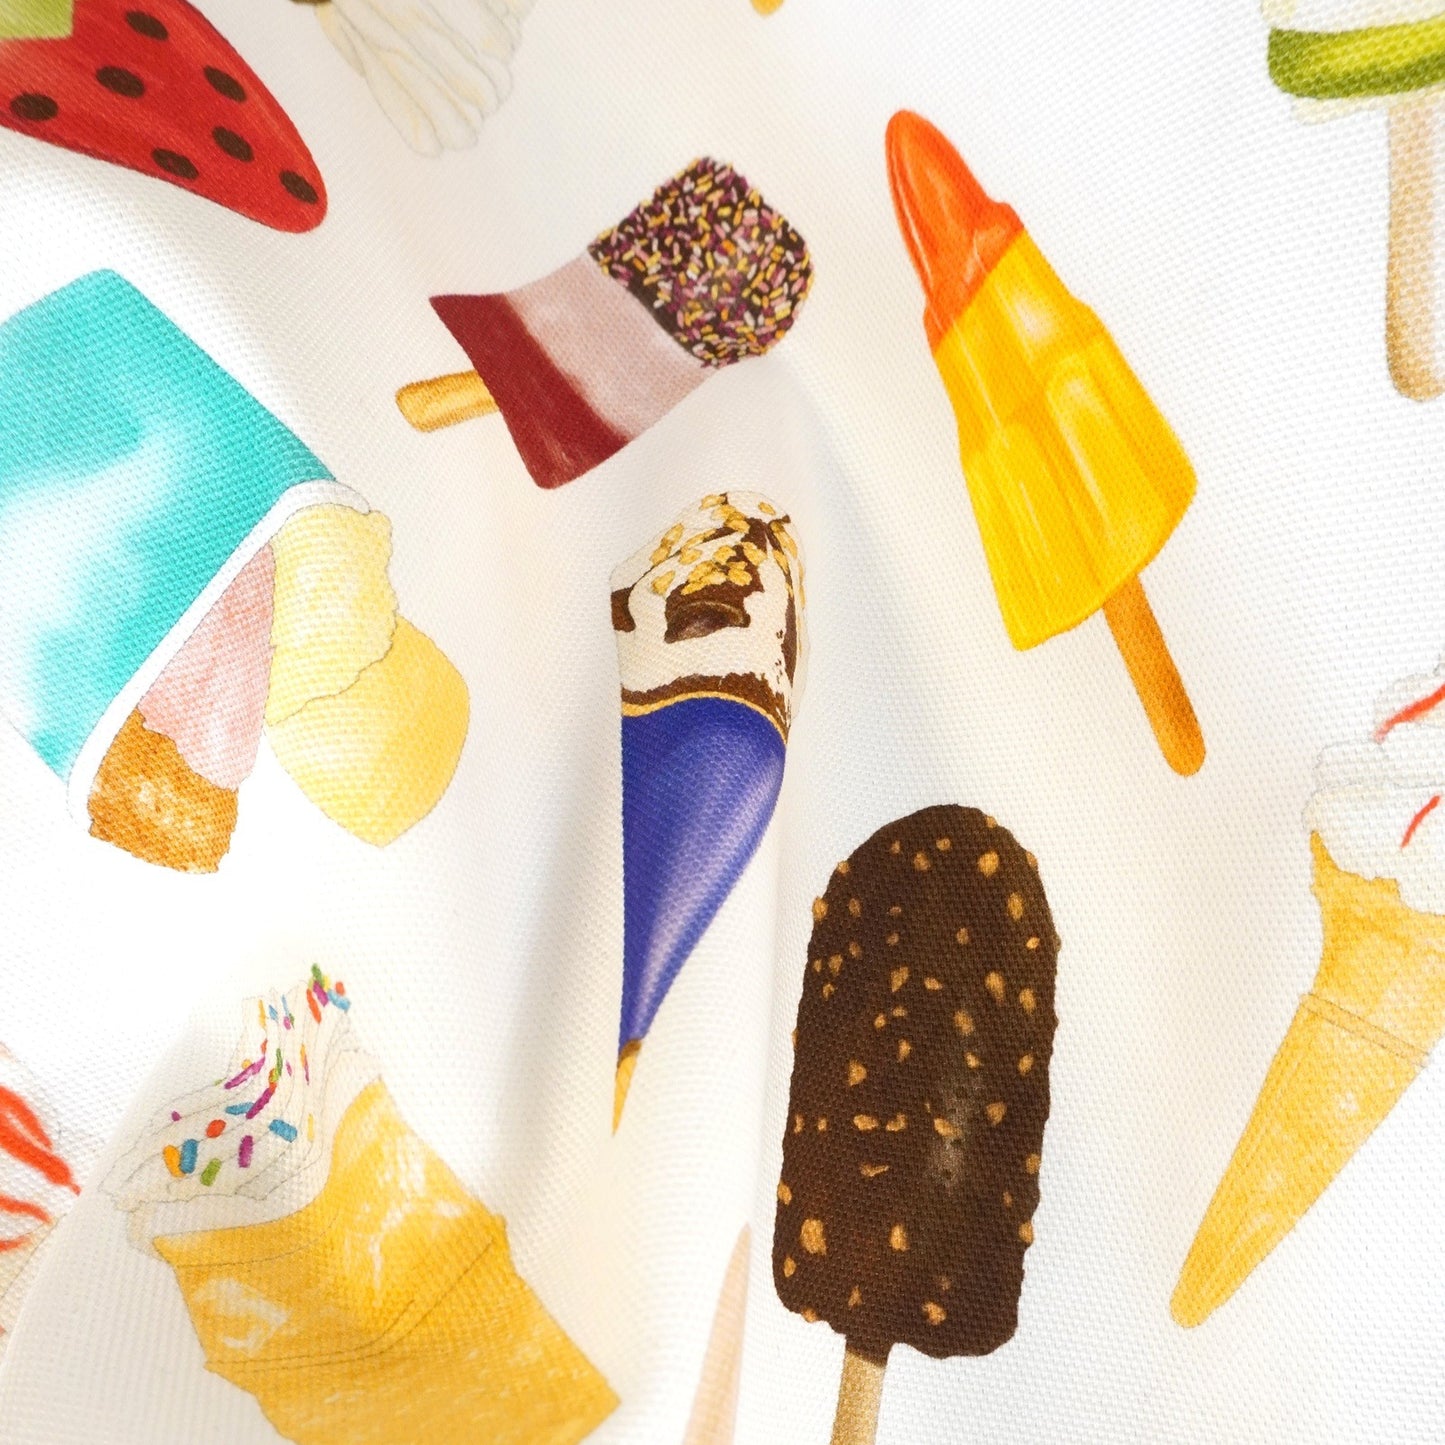 Ice cream illustrations on cotton apron